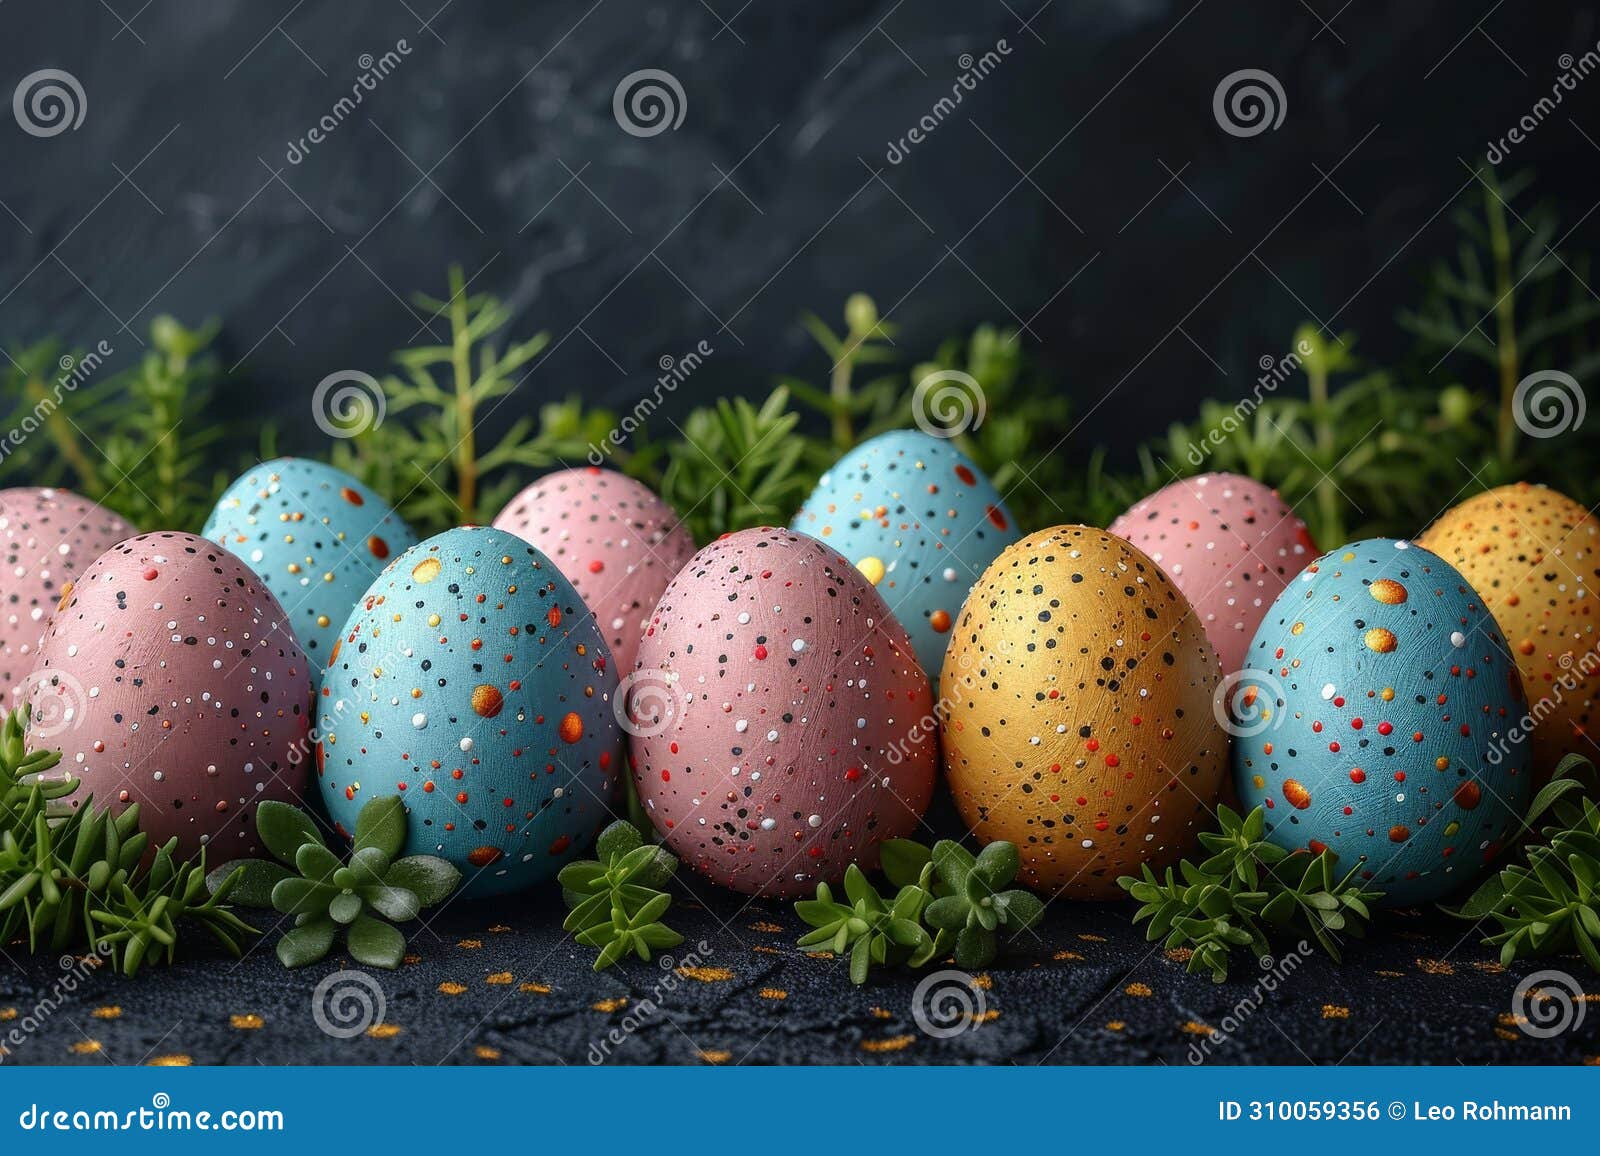 happy easter lovely eggs easter egg ideas basket. white eco friendly easter basket bunny giggly. beige background wallpaper